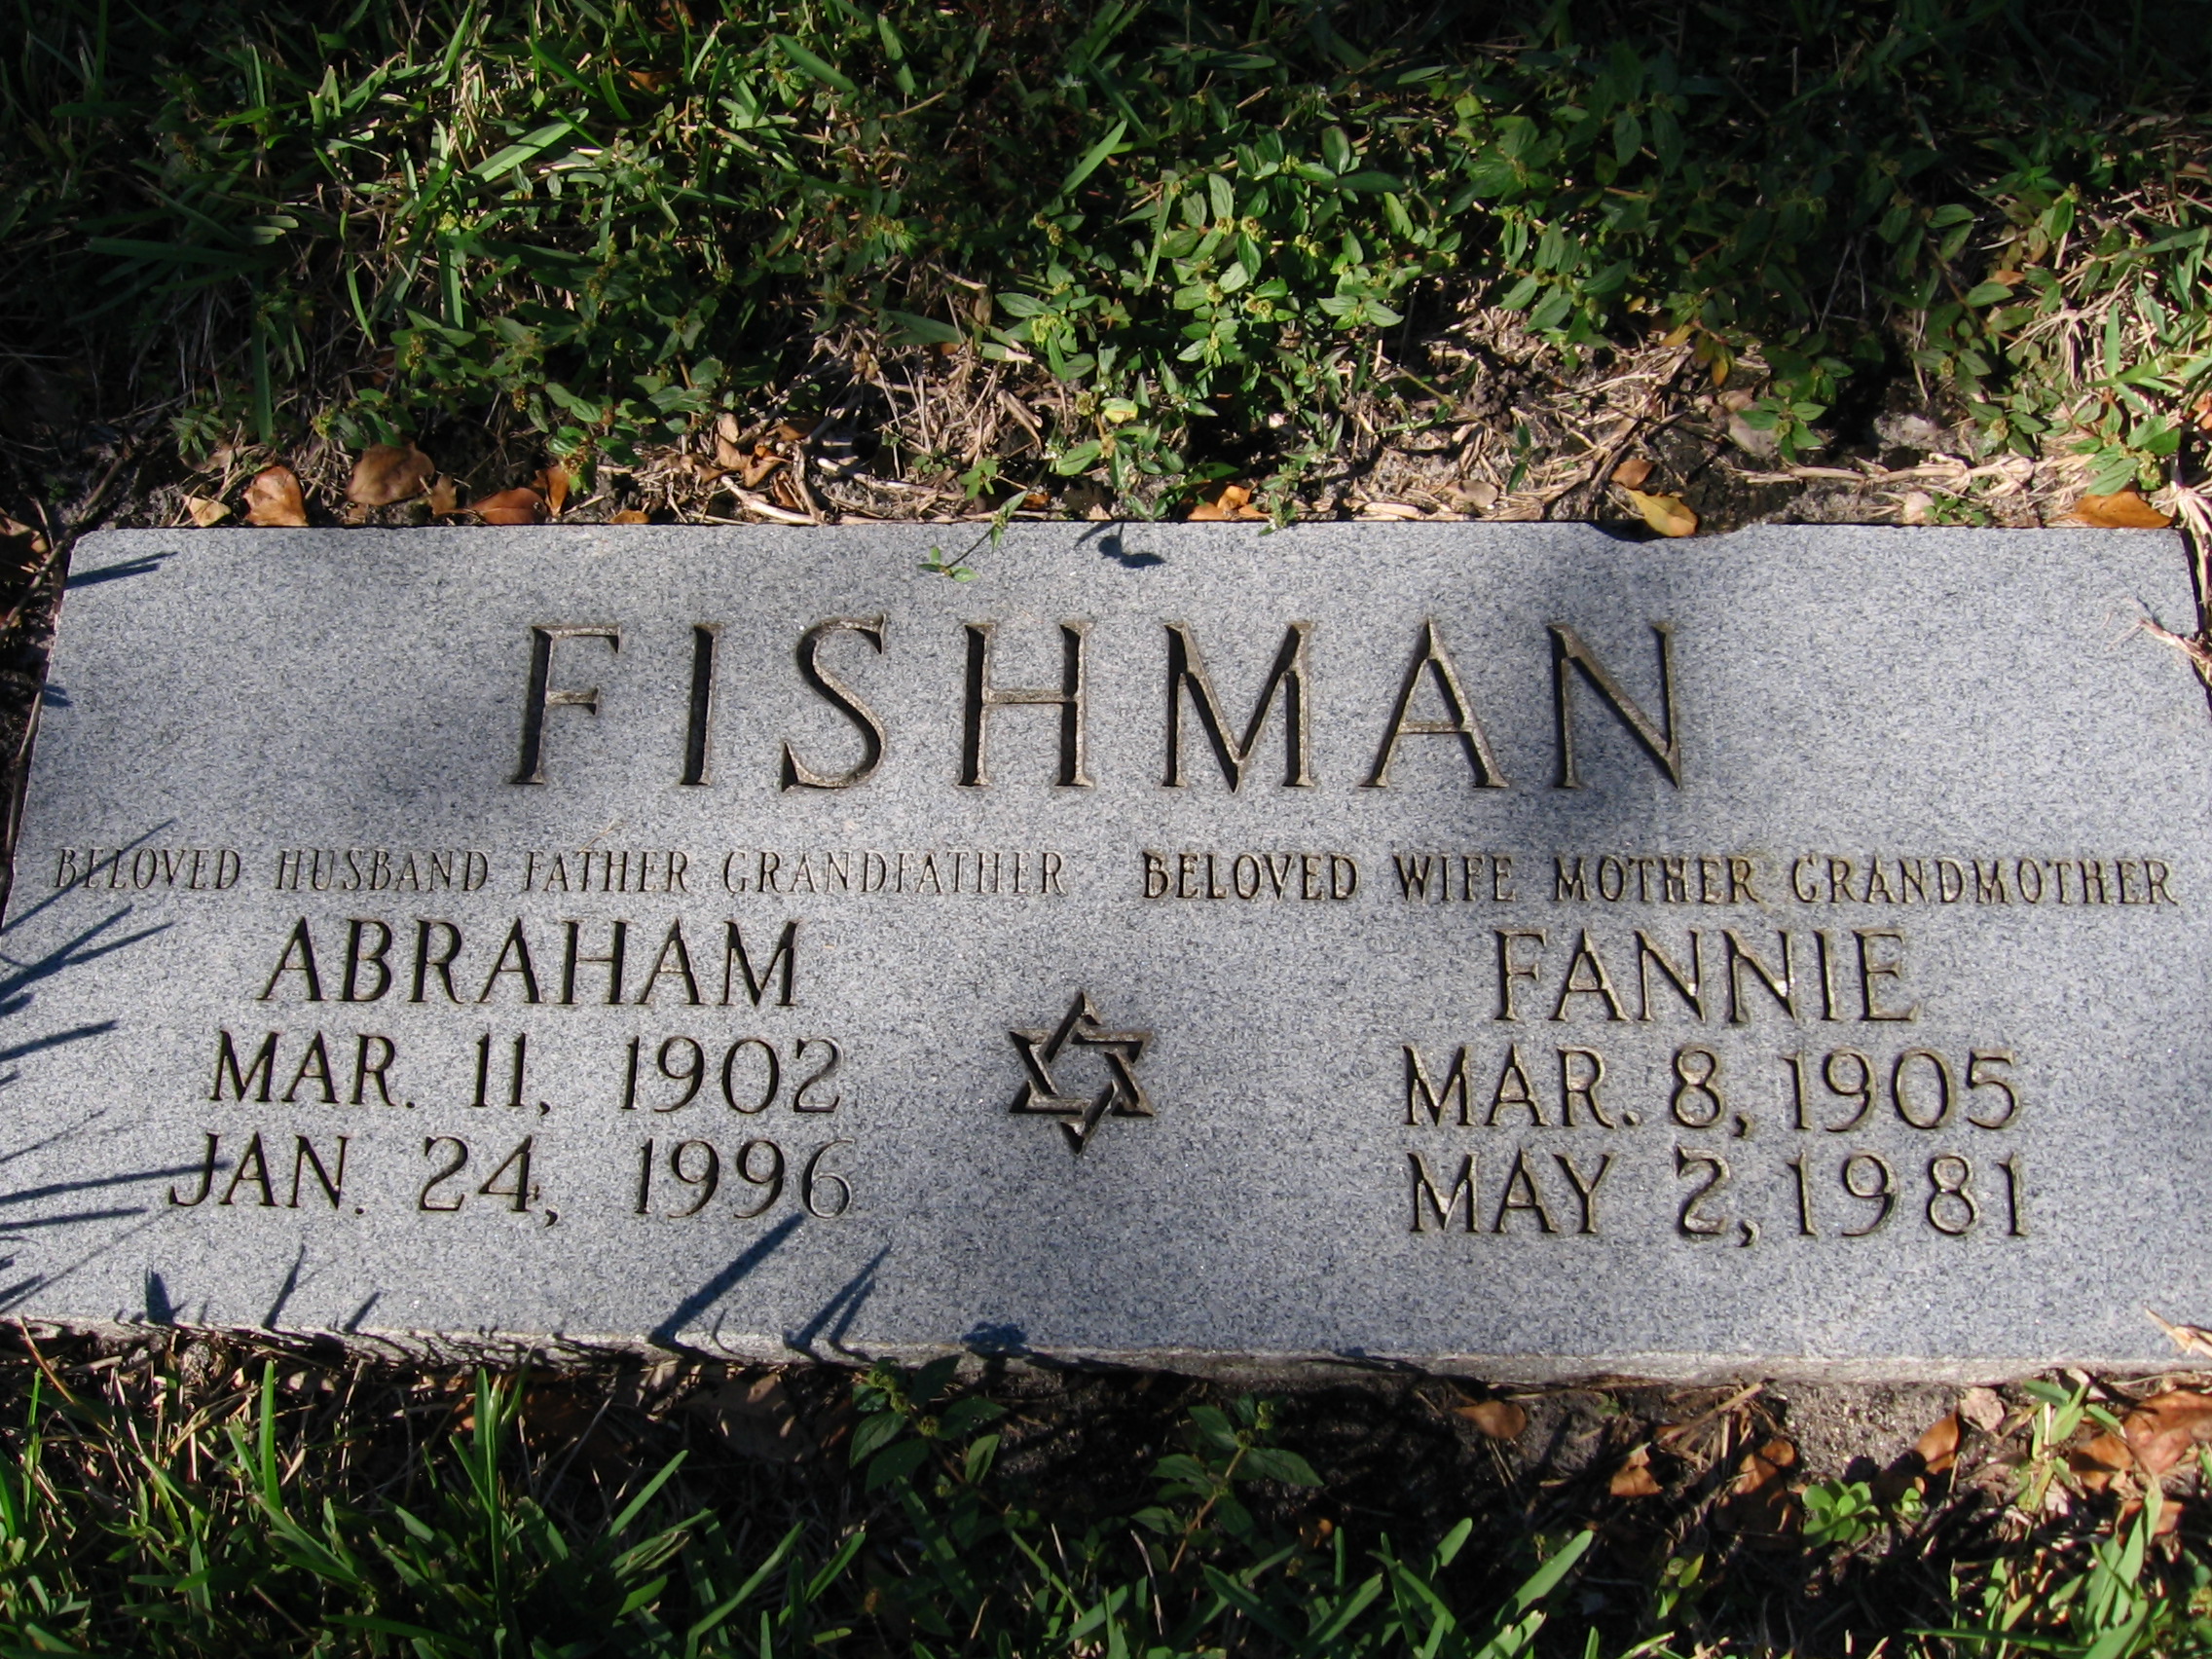 Abraham Fishman